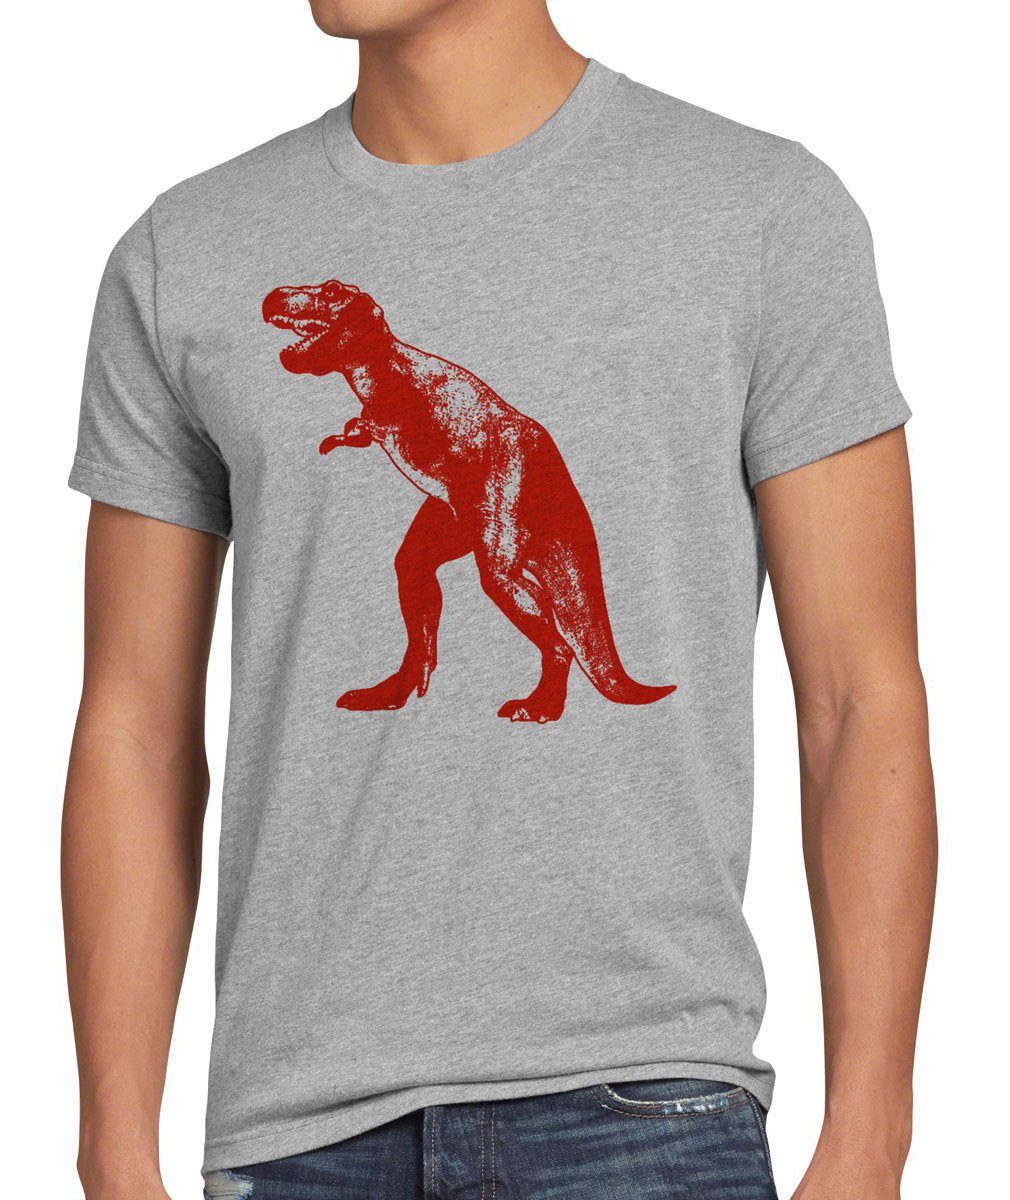 style3 Print-Shirt Herren T-Shirt Dinosaurier bang grau Rex meliert Cooper Theory big Evolution Sheldon Dino